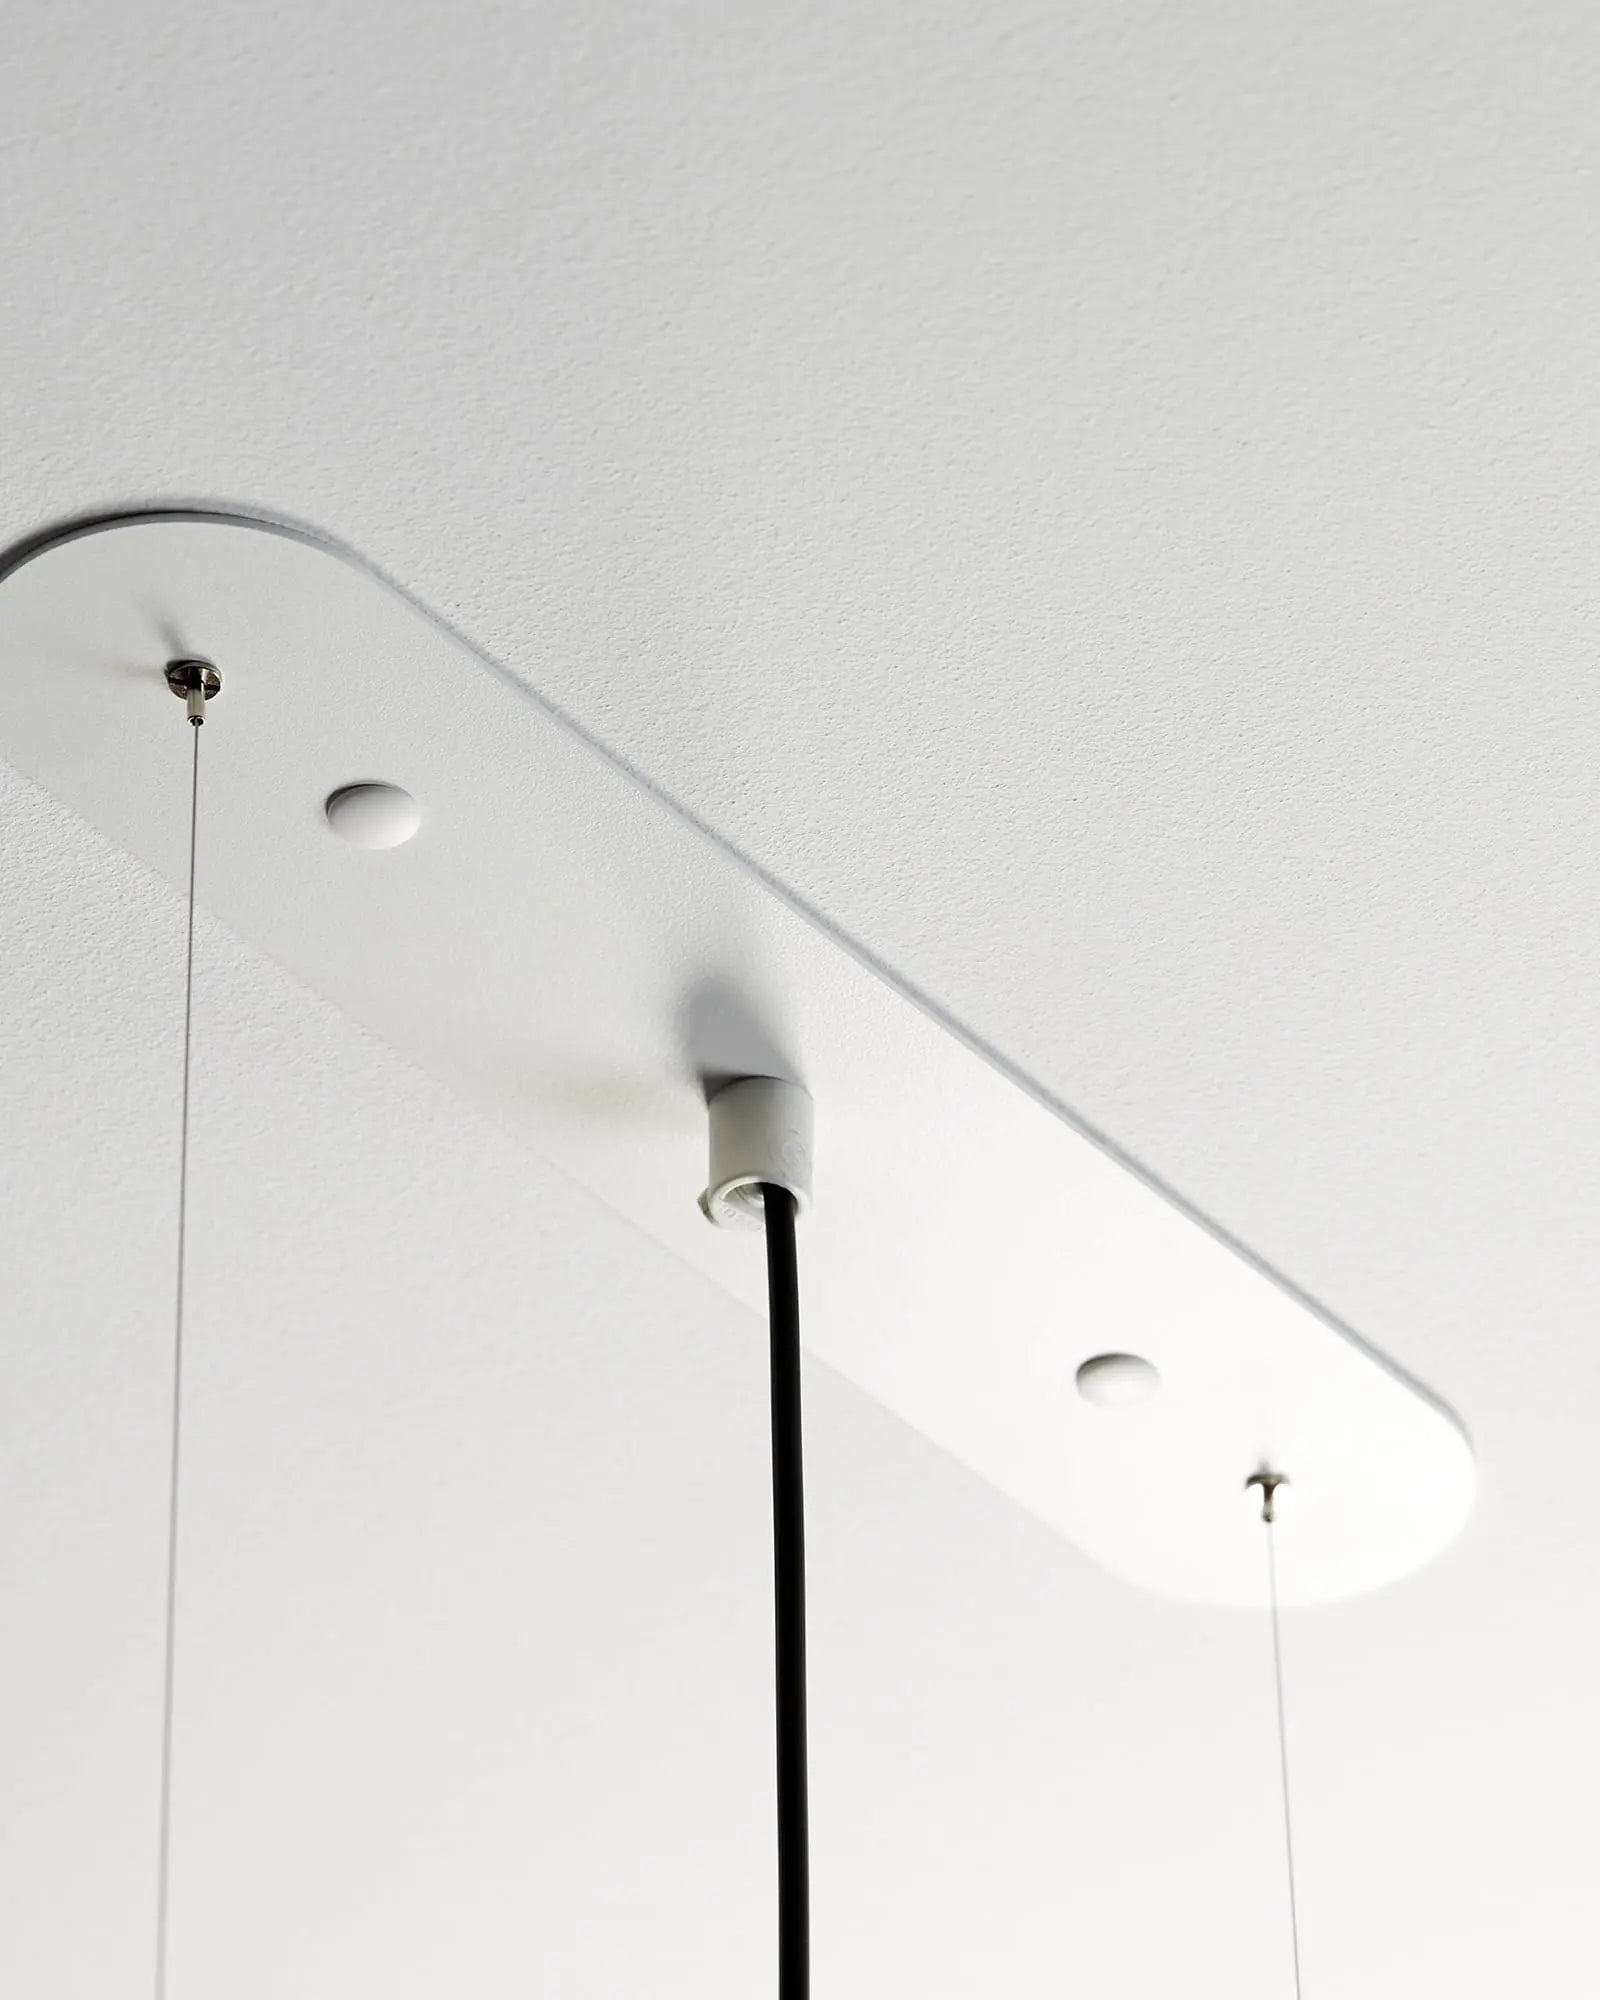 Volta Linear pendant light by Estiluz Lighting canopy detail